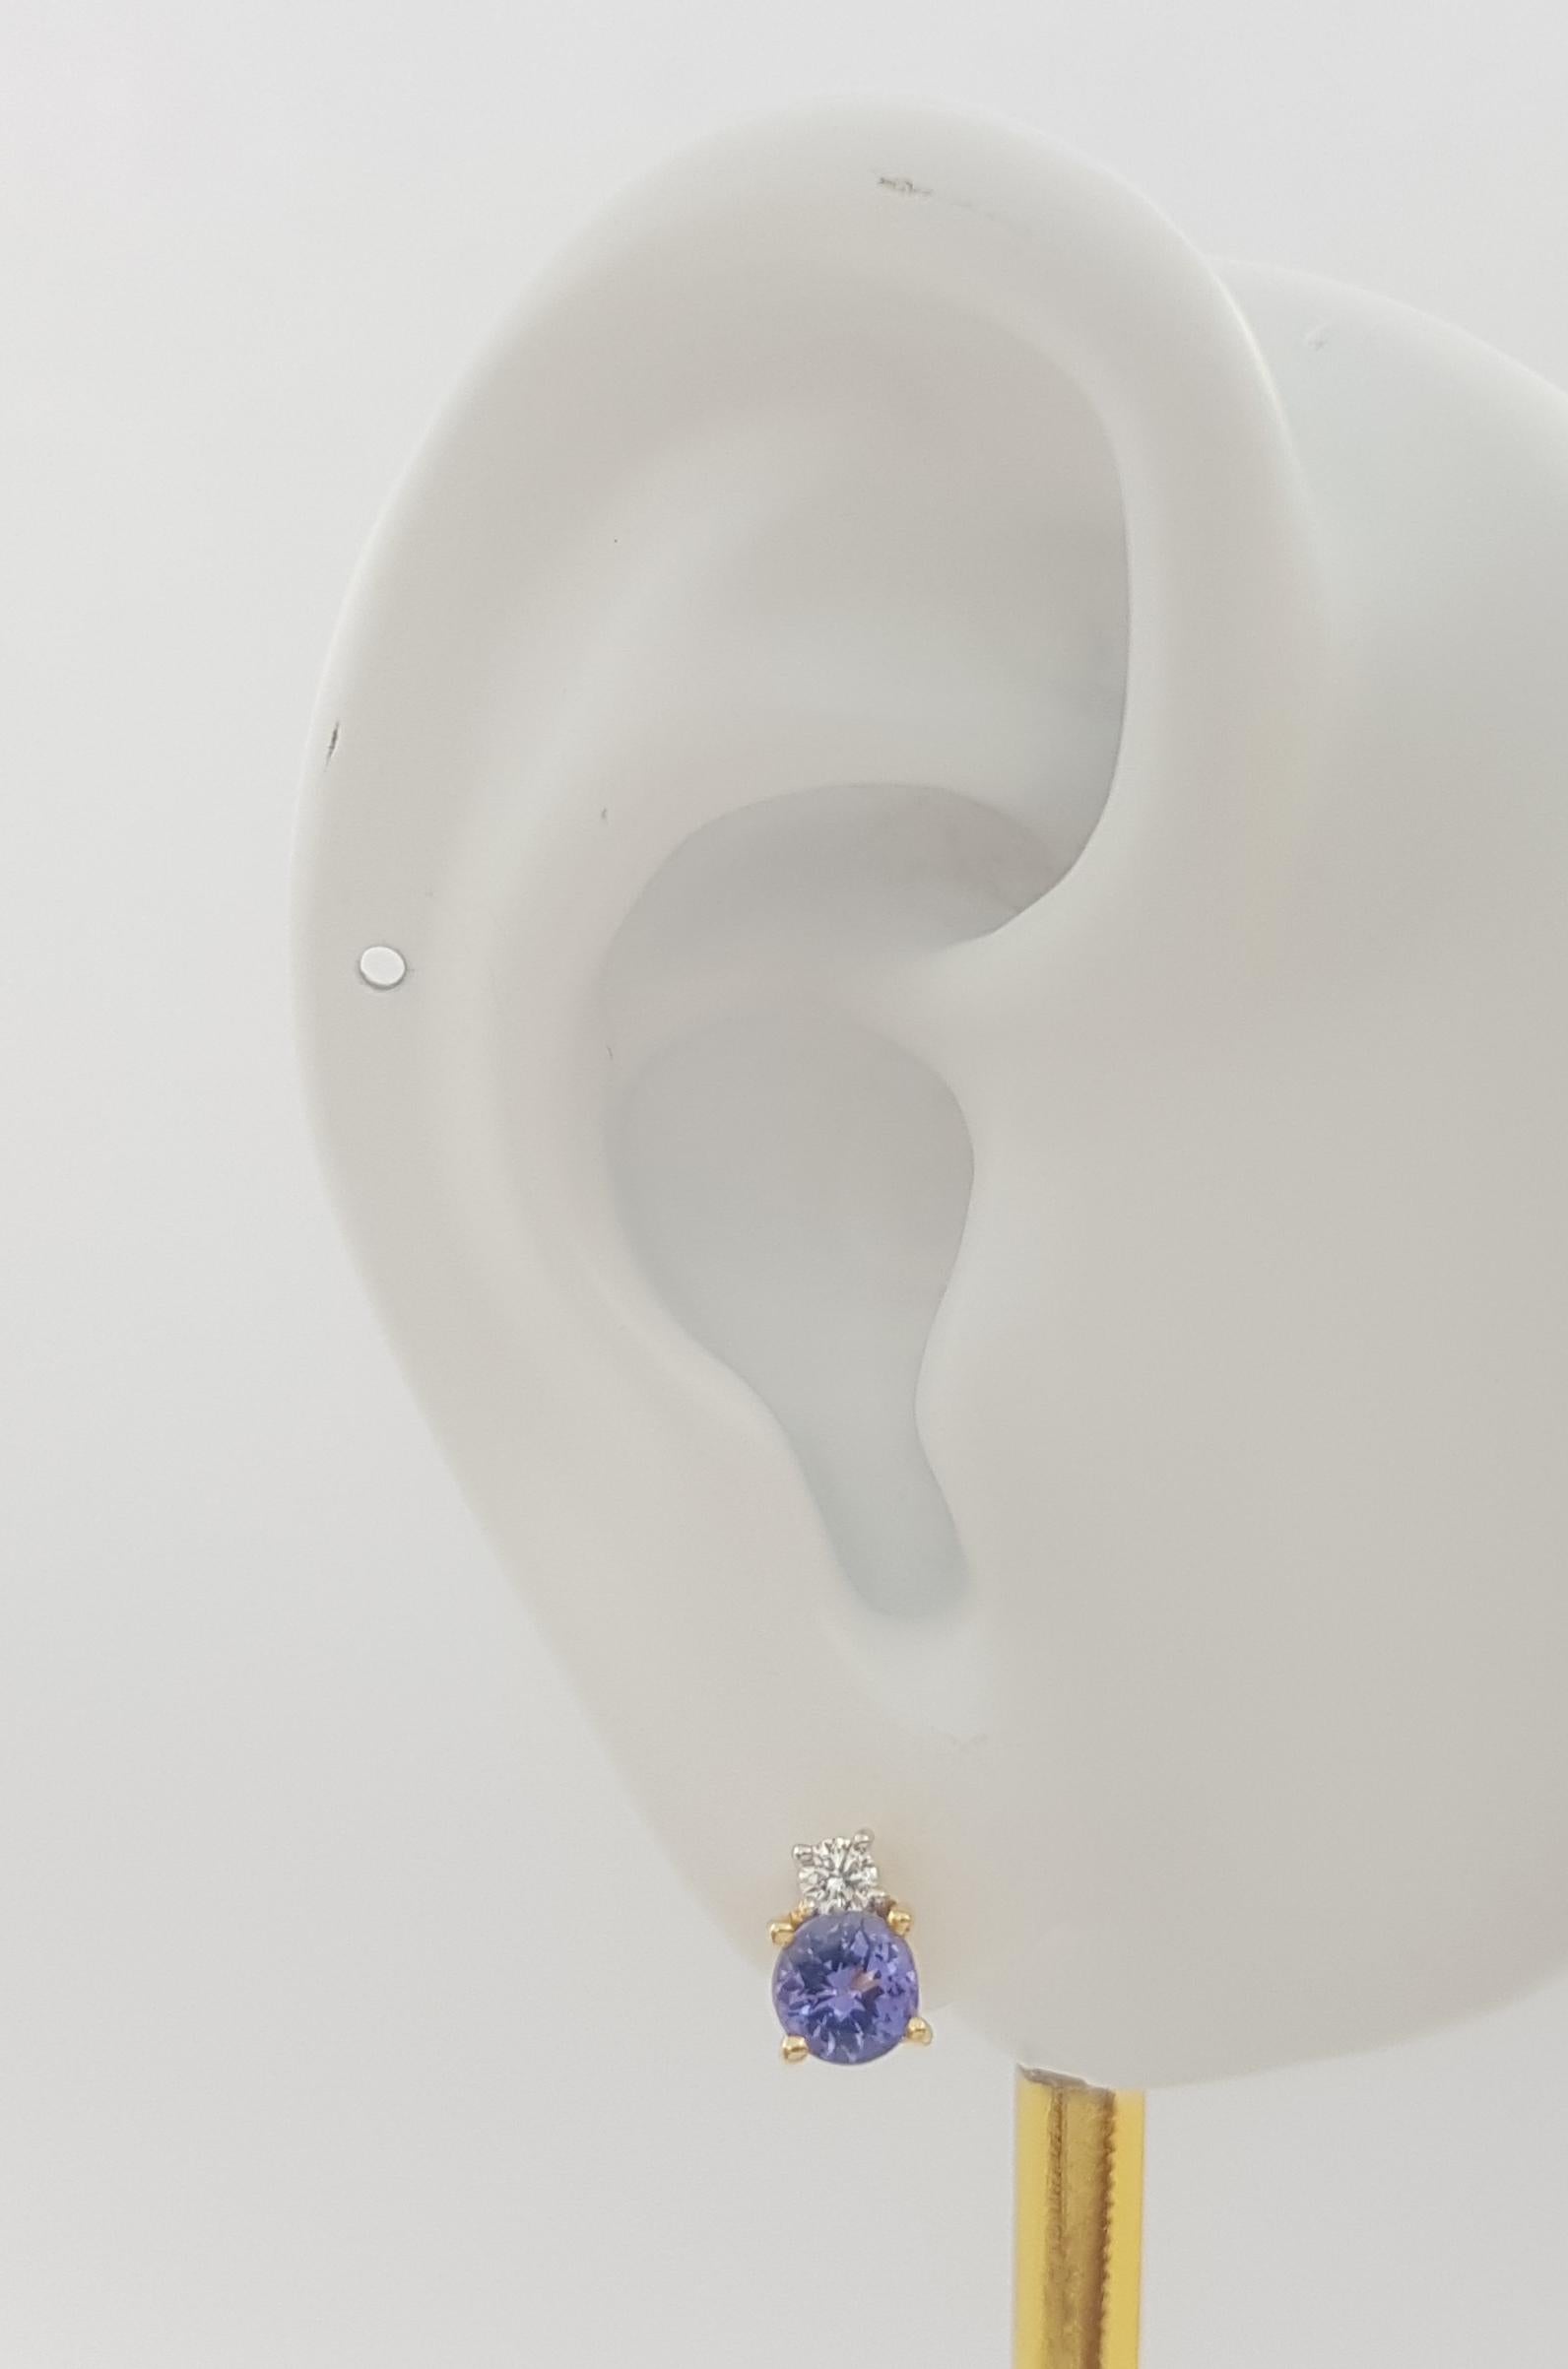 Tanzanite 0.90 carat with Diamond 0.11 carat Earrings set in 18K Gold Settings

Width: 0.4 cm 
Length: 0.7 cm
Total Weight: 3.40 grams

